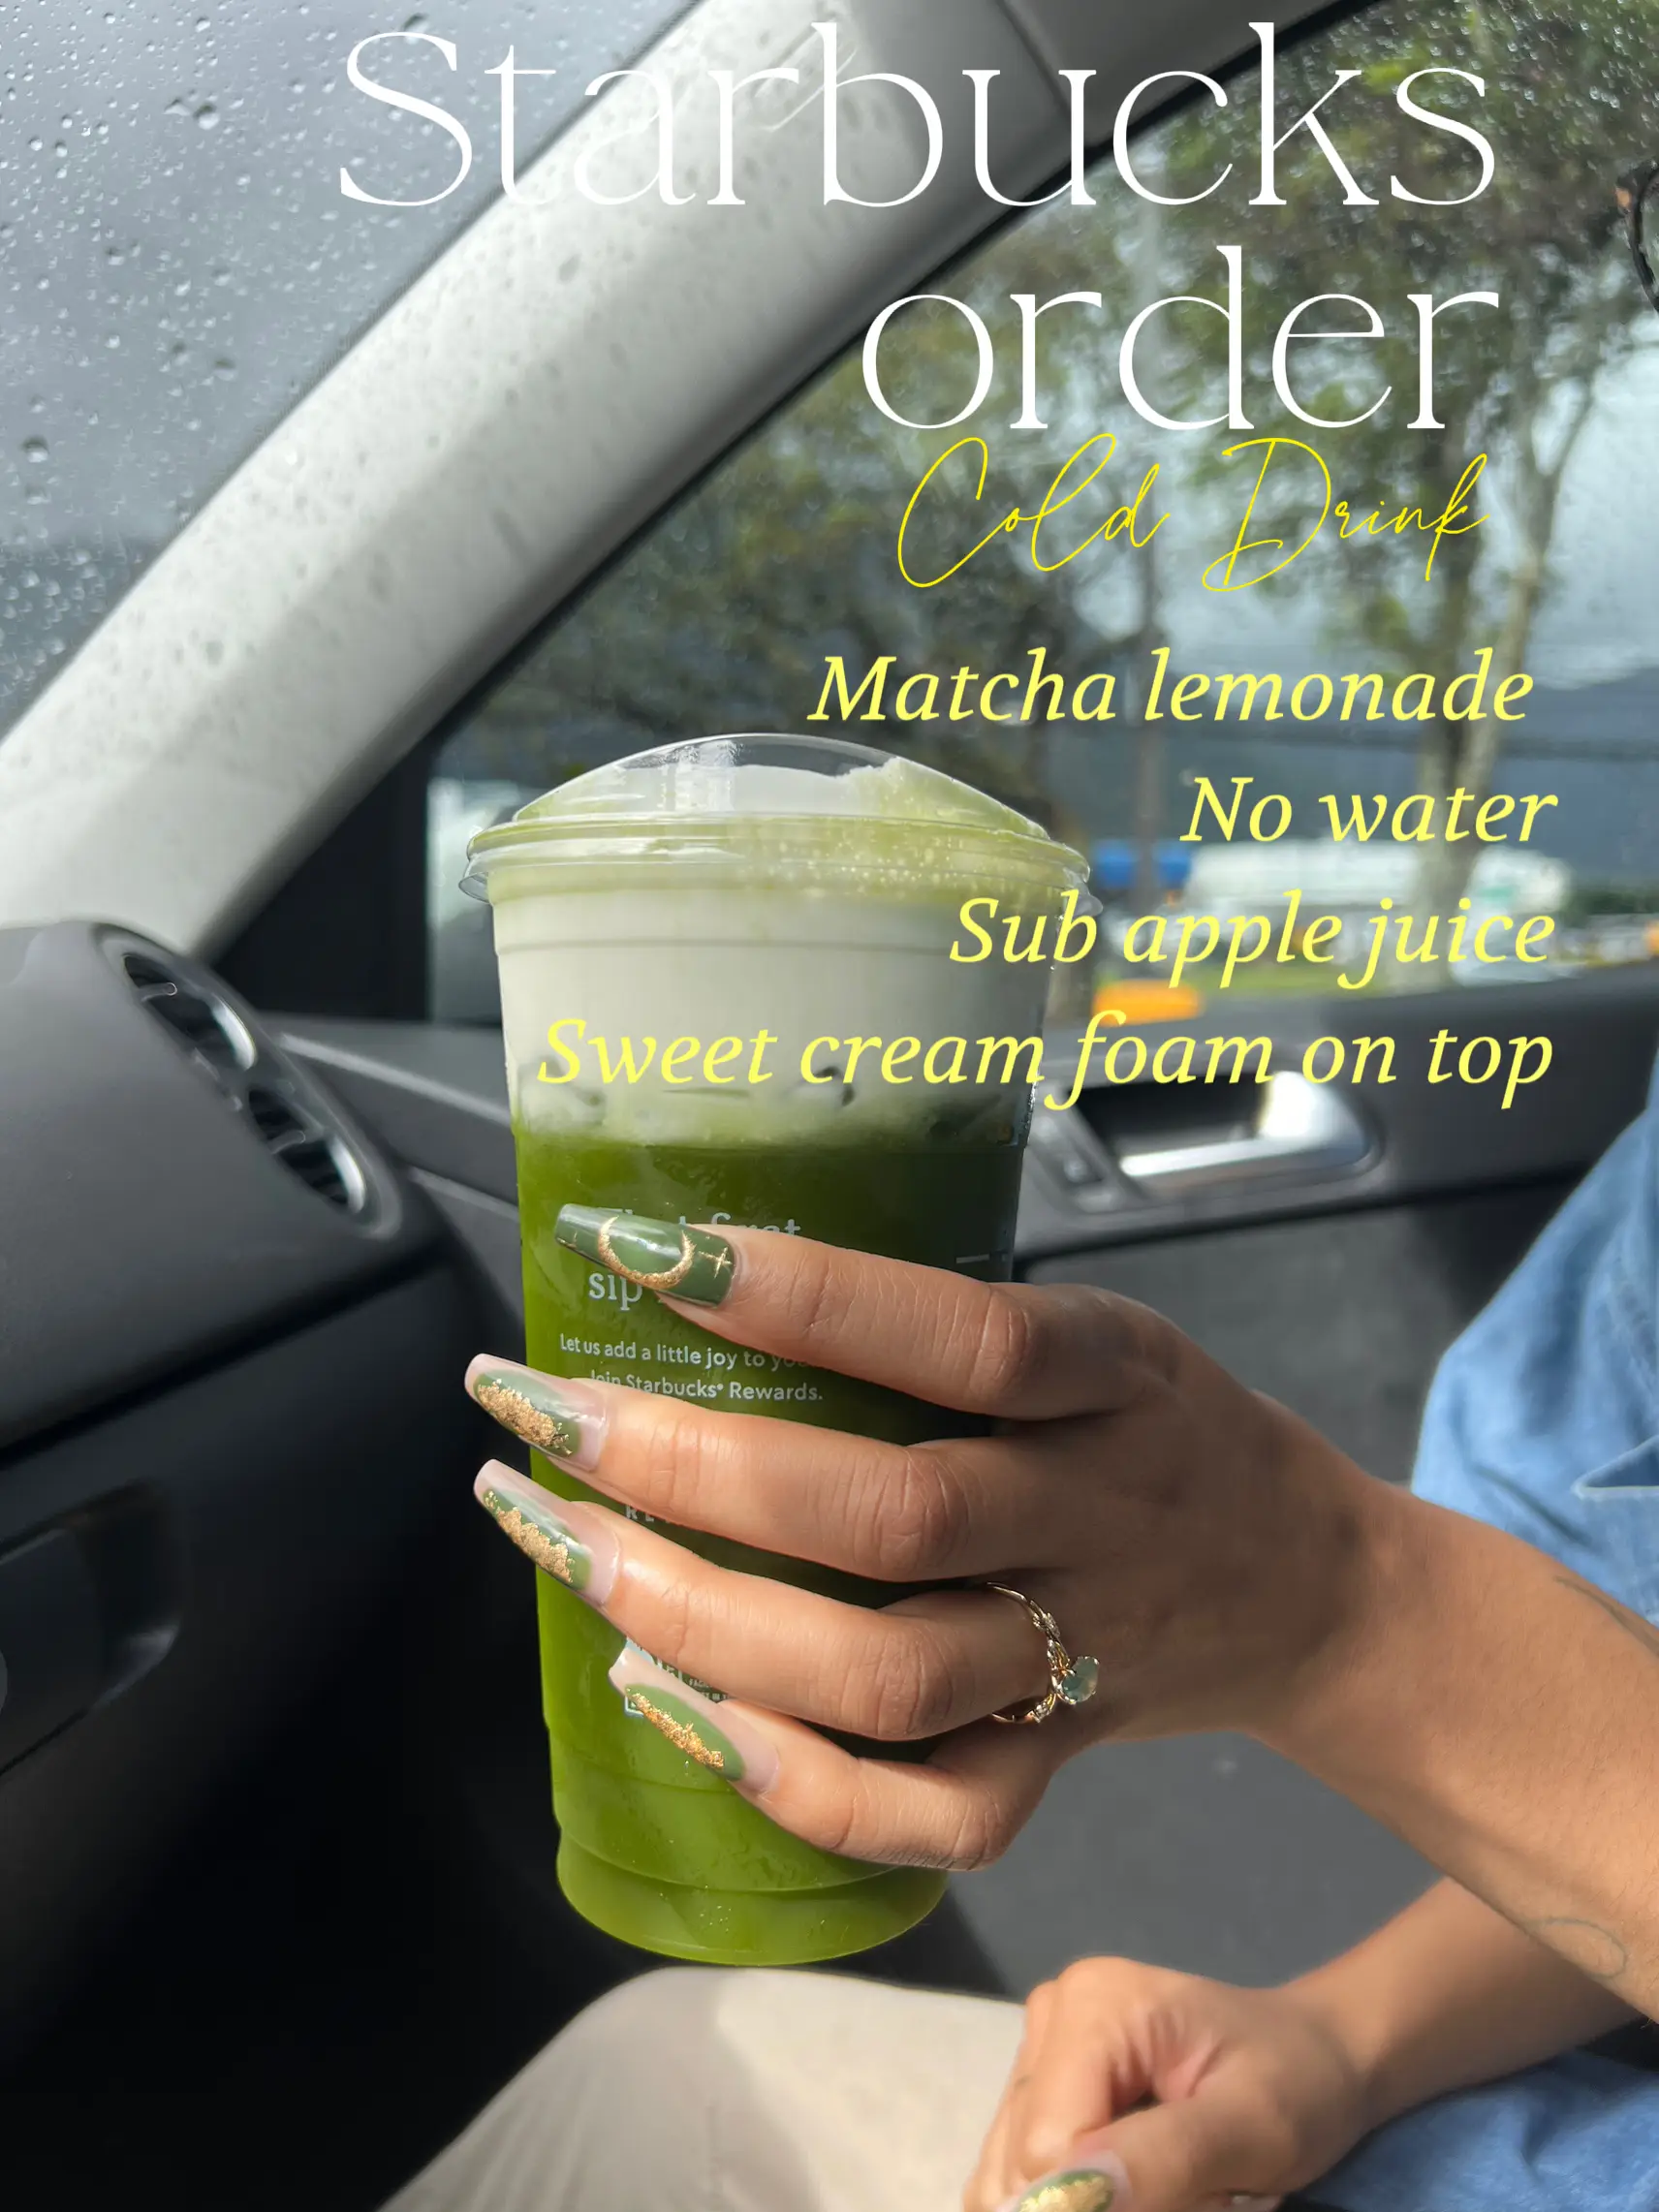 starbucks explained: matcha latte, matcha frappuccino, matcha lemonade 